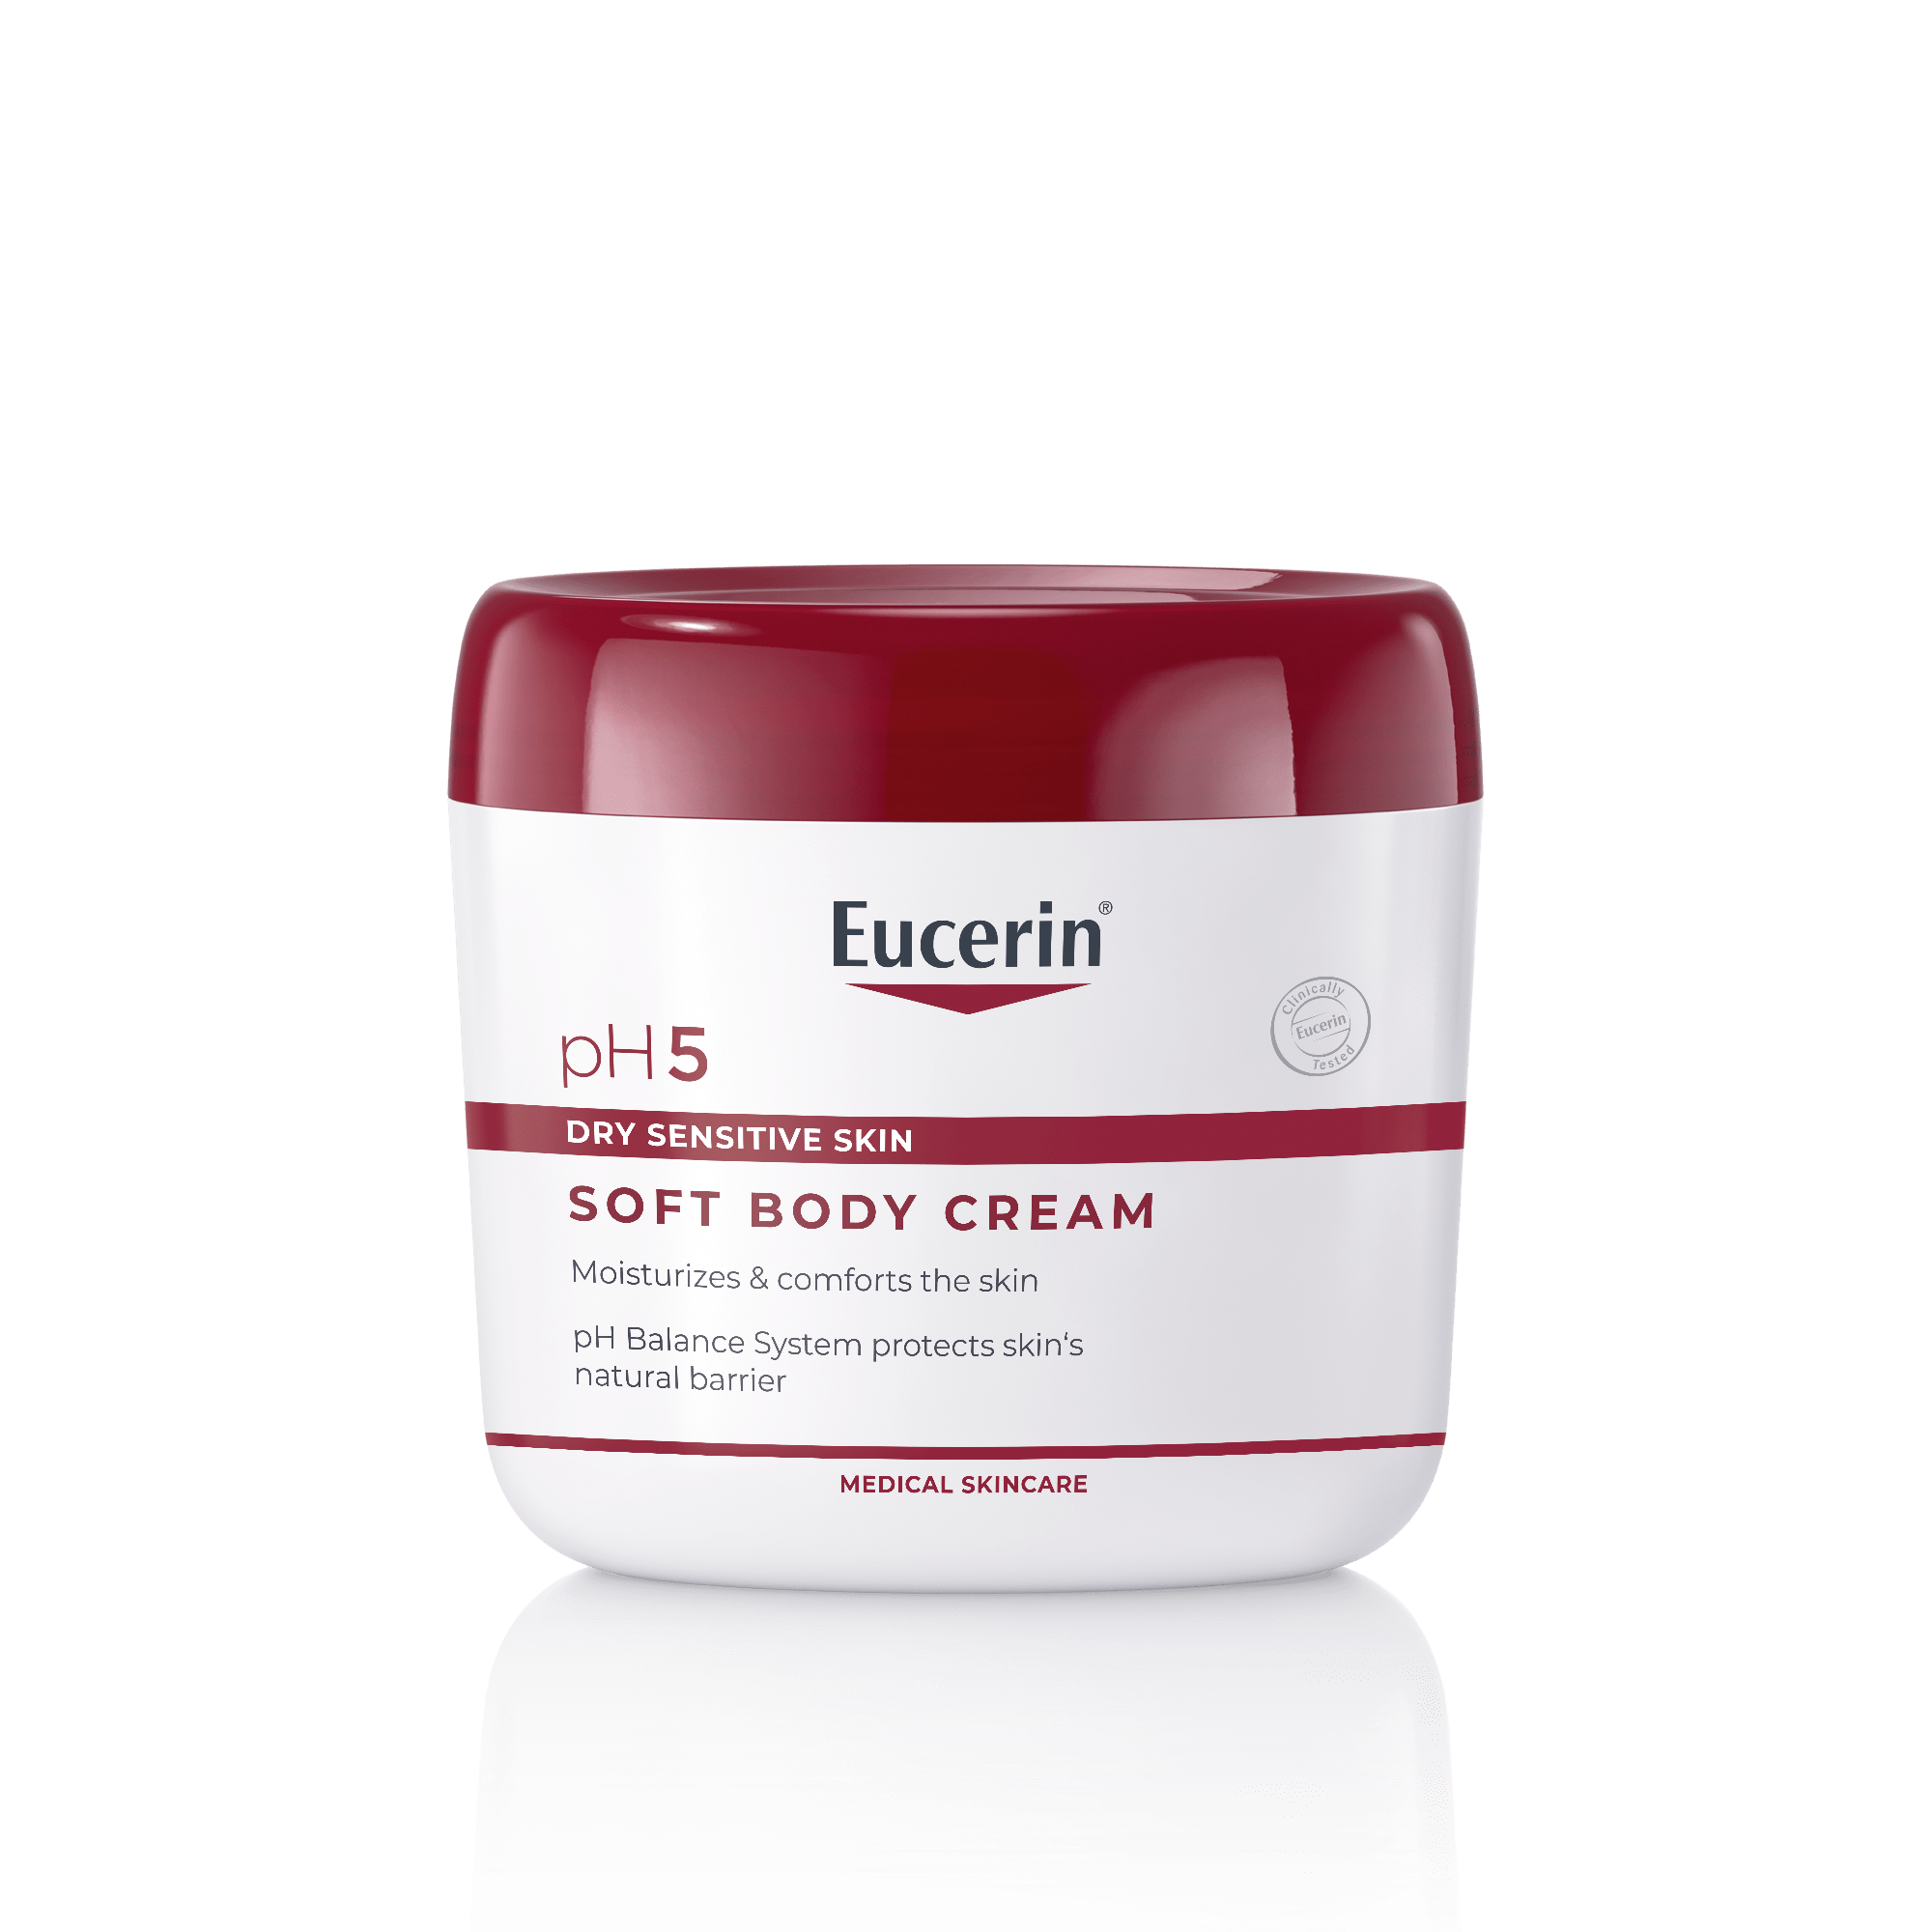 pH5 Soft Body Cream, body cream for dry, sensitive skin